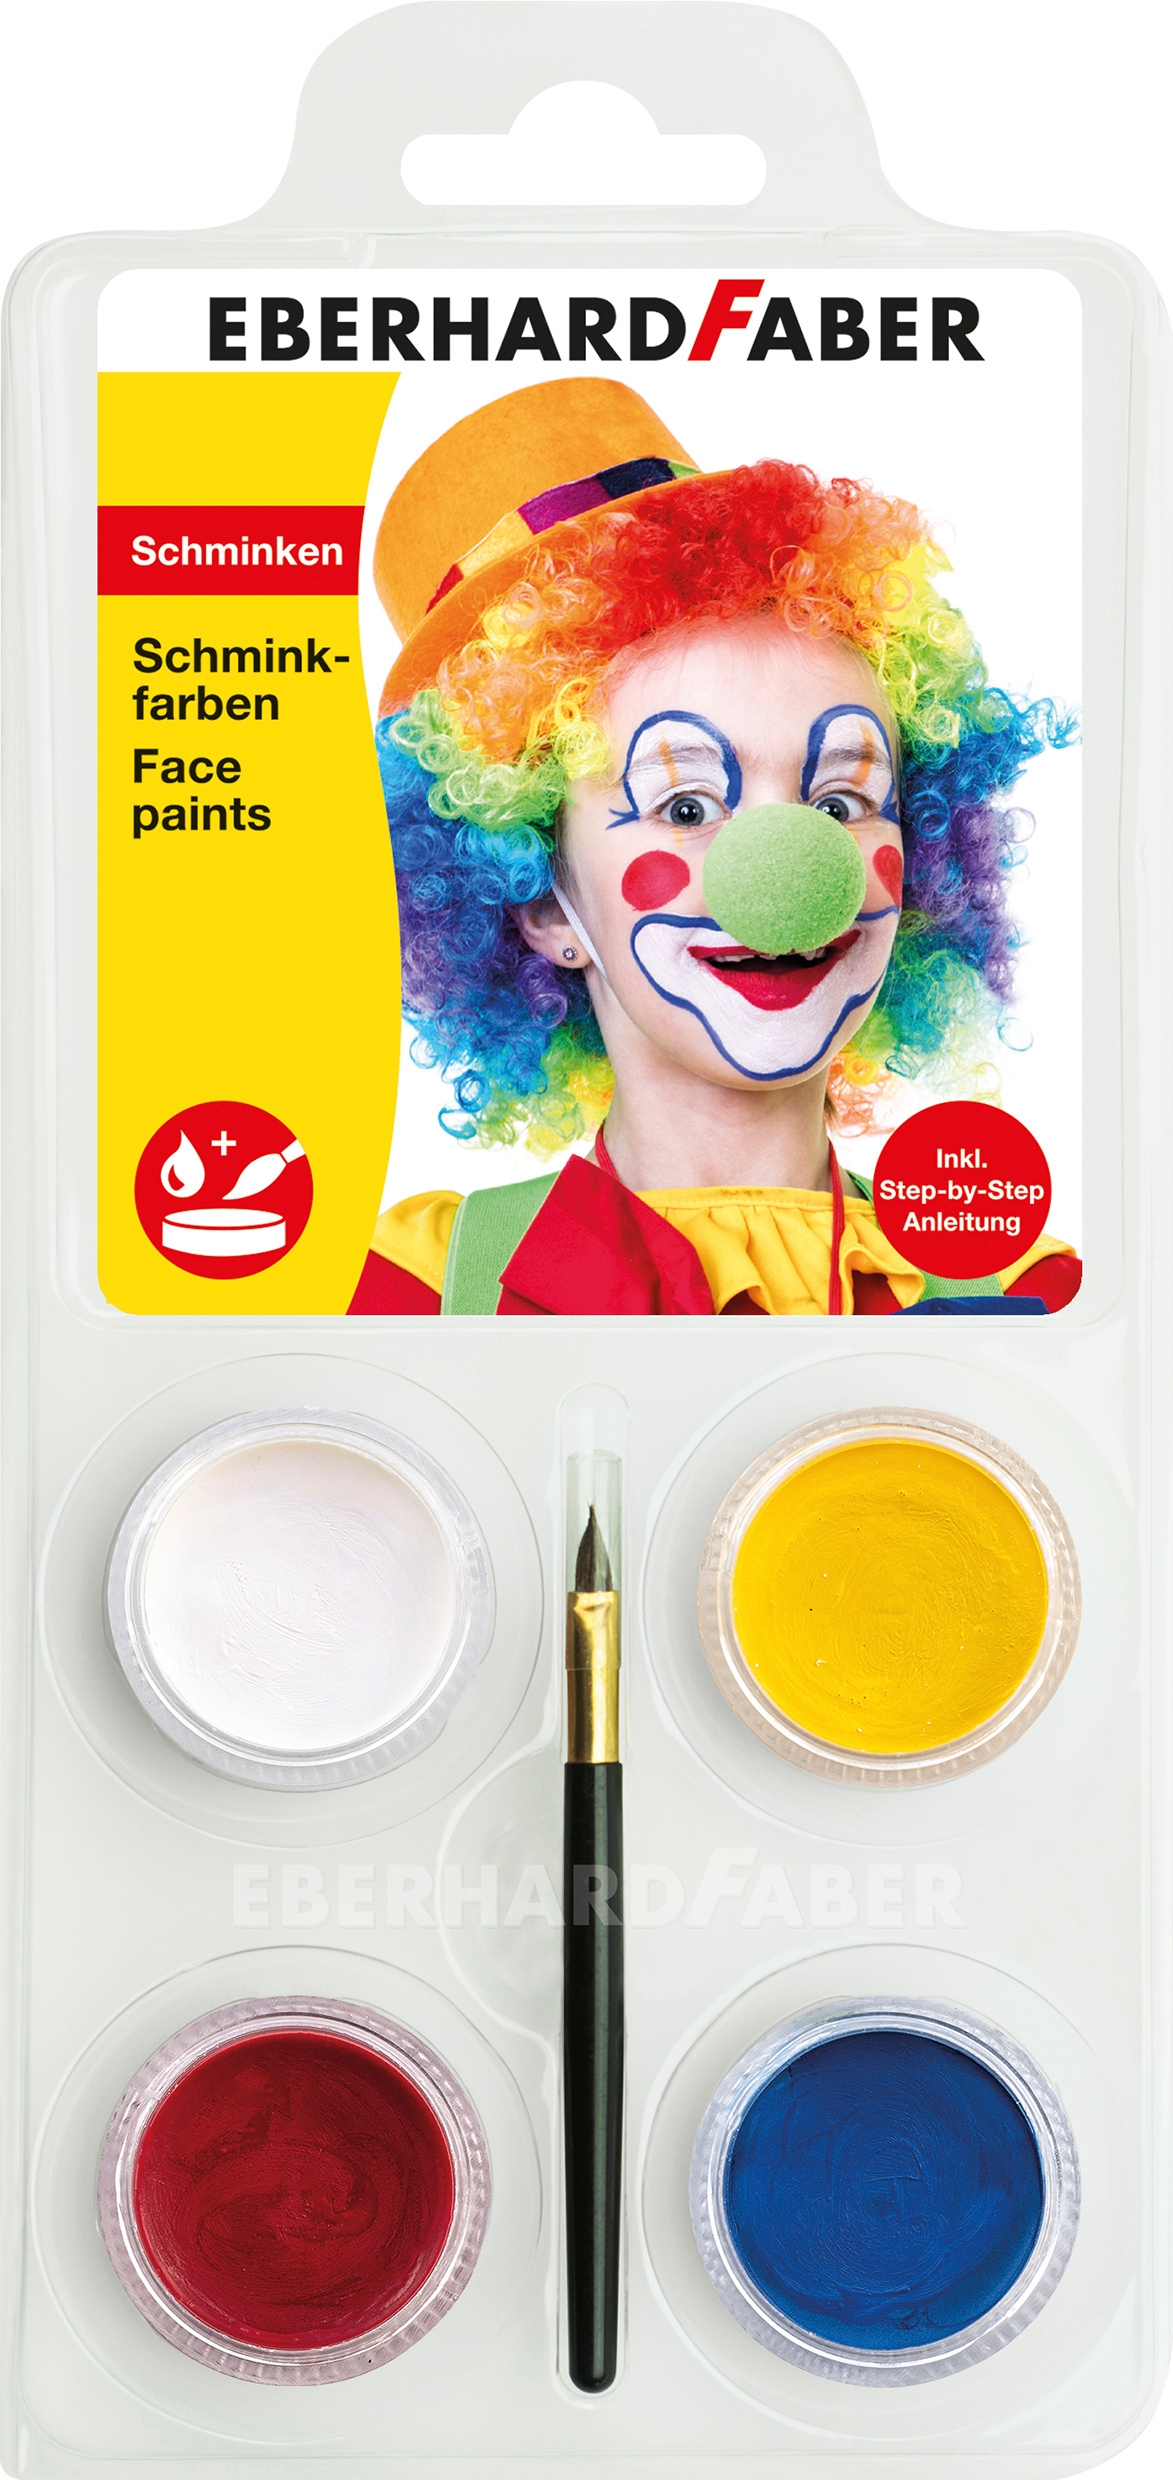 EBERHARD FABER Set maquillage 579024 avec pinceau